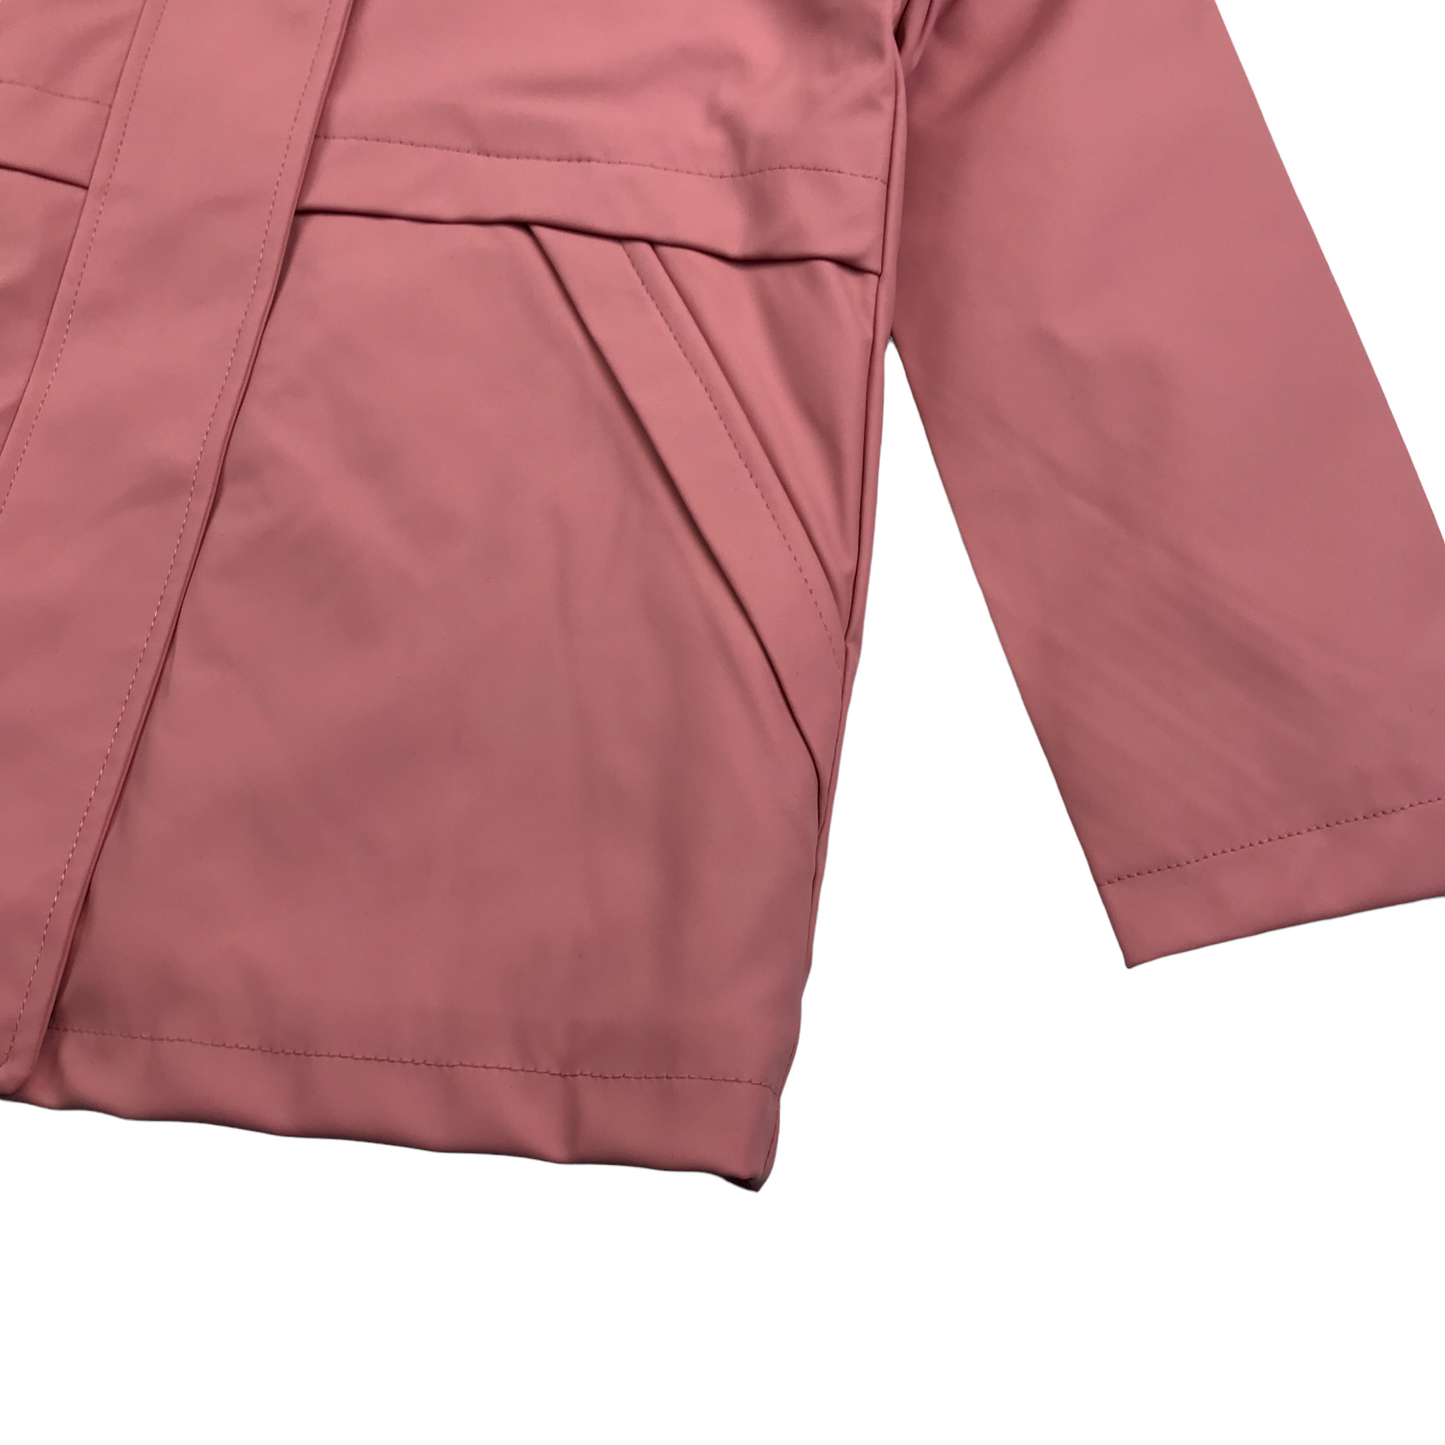 Primark Pink Warm Lined Rain Jacket Age 7